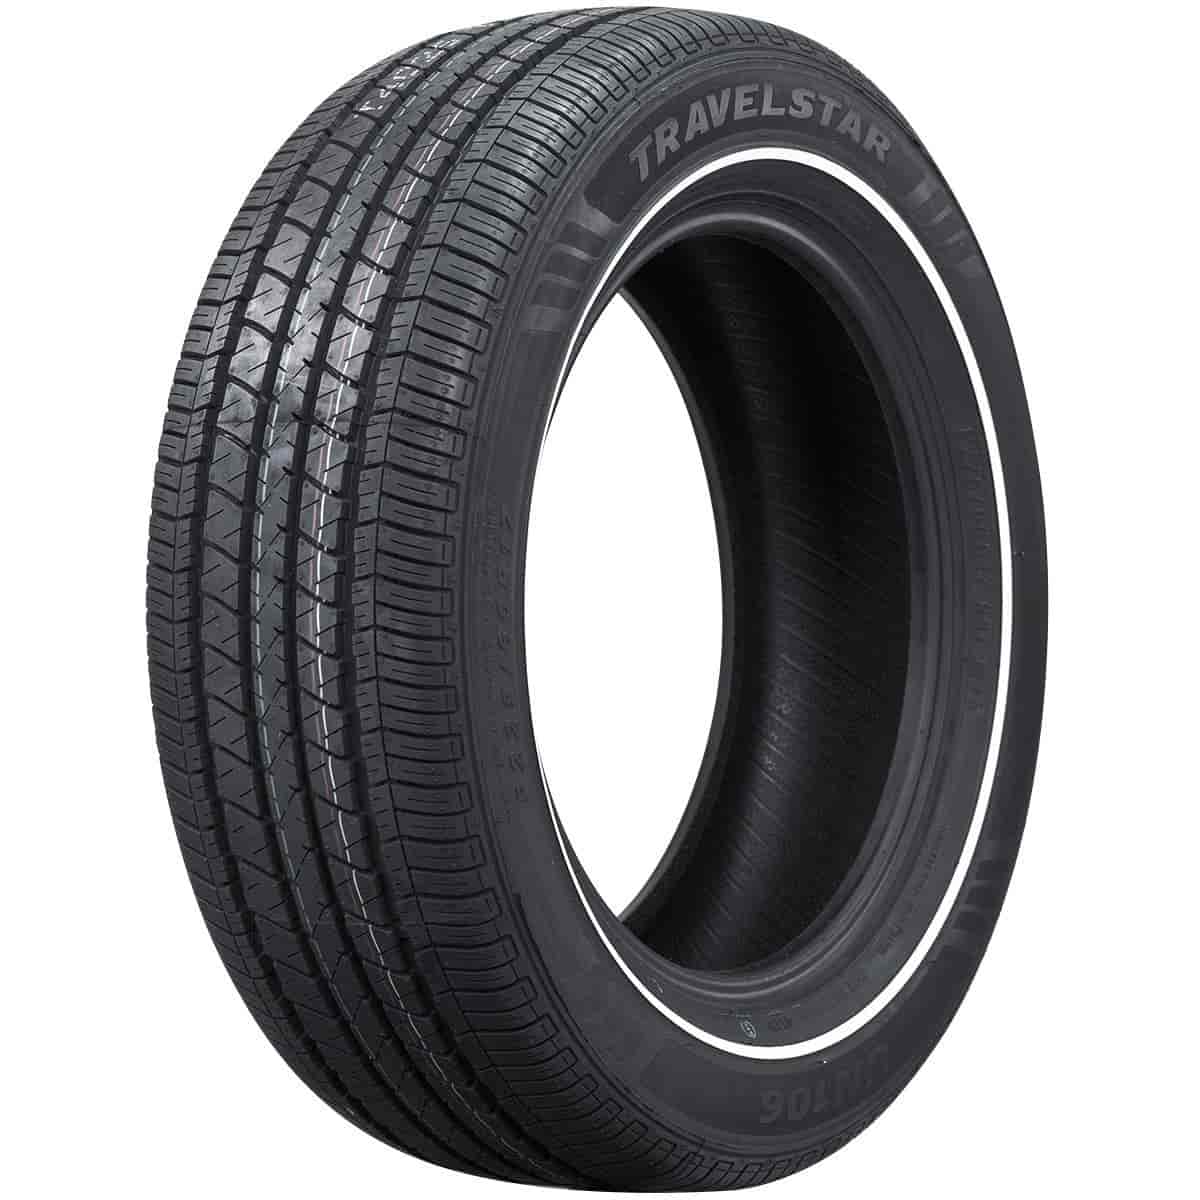 Travelstar Radial Tire P235/75R15